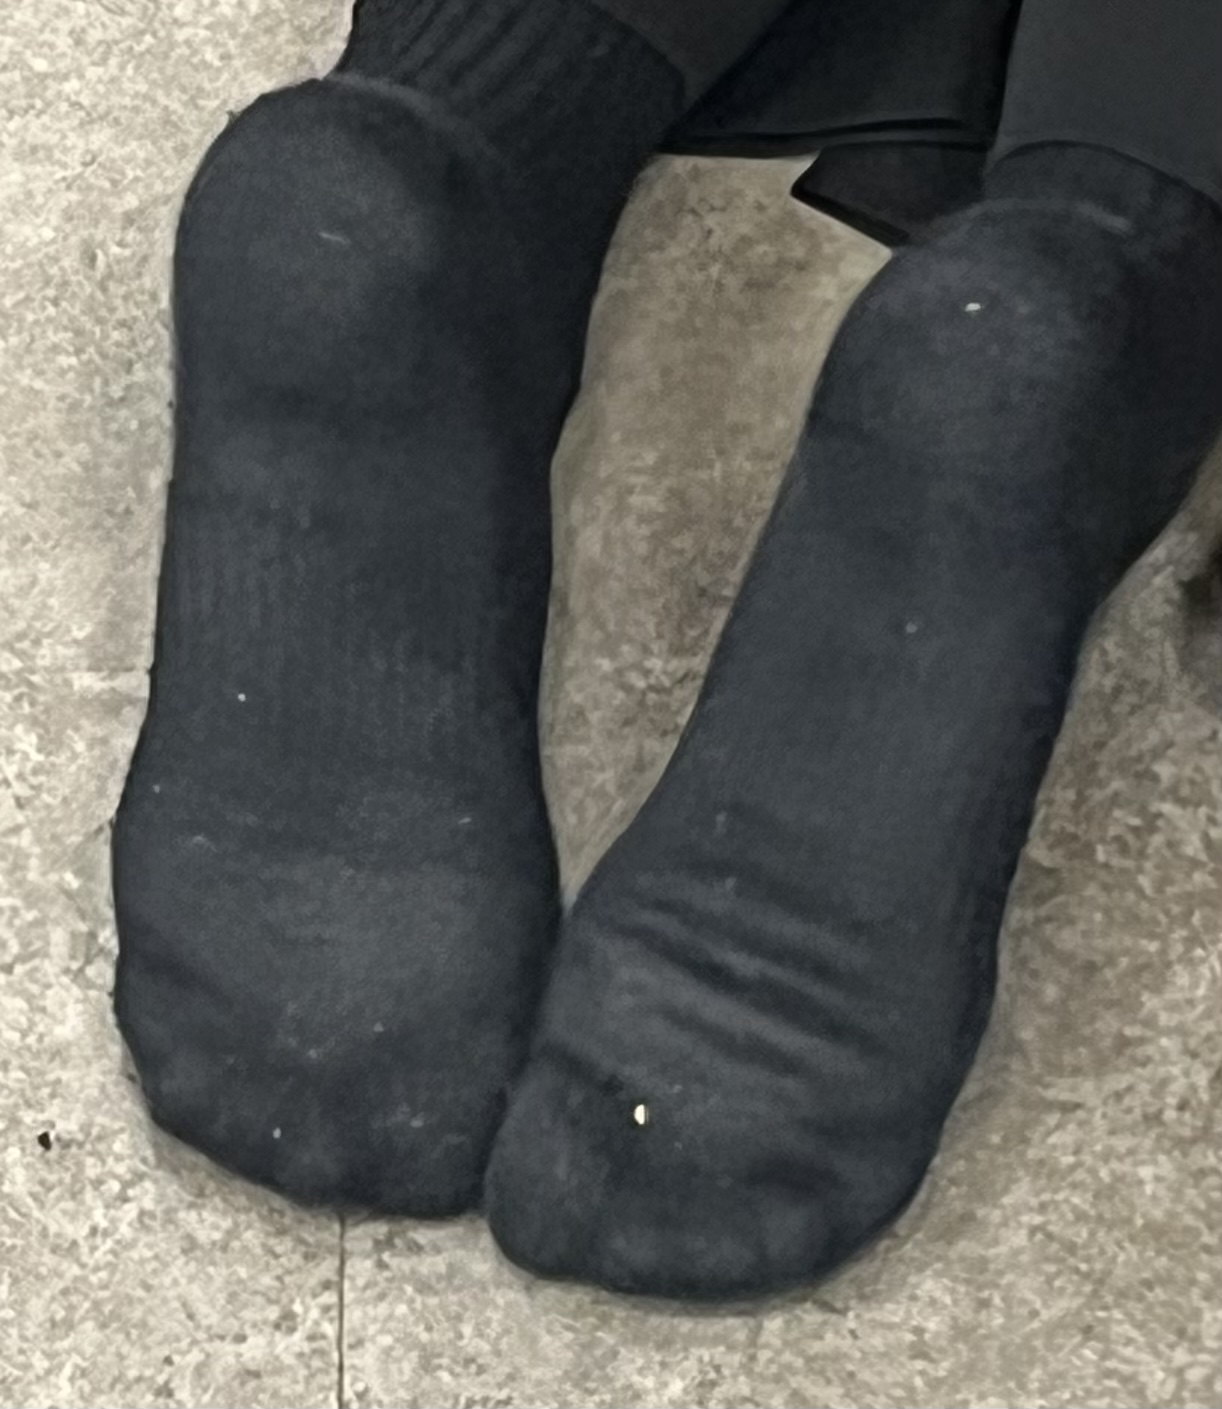 Candid socked feet by idcoan on DeviantArt